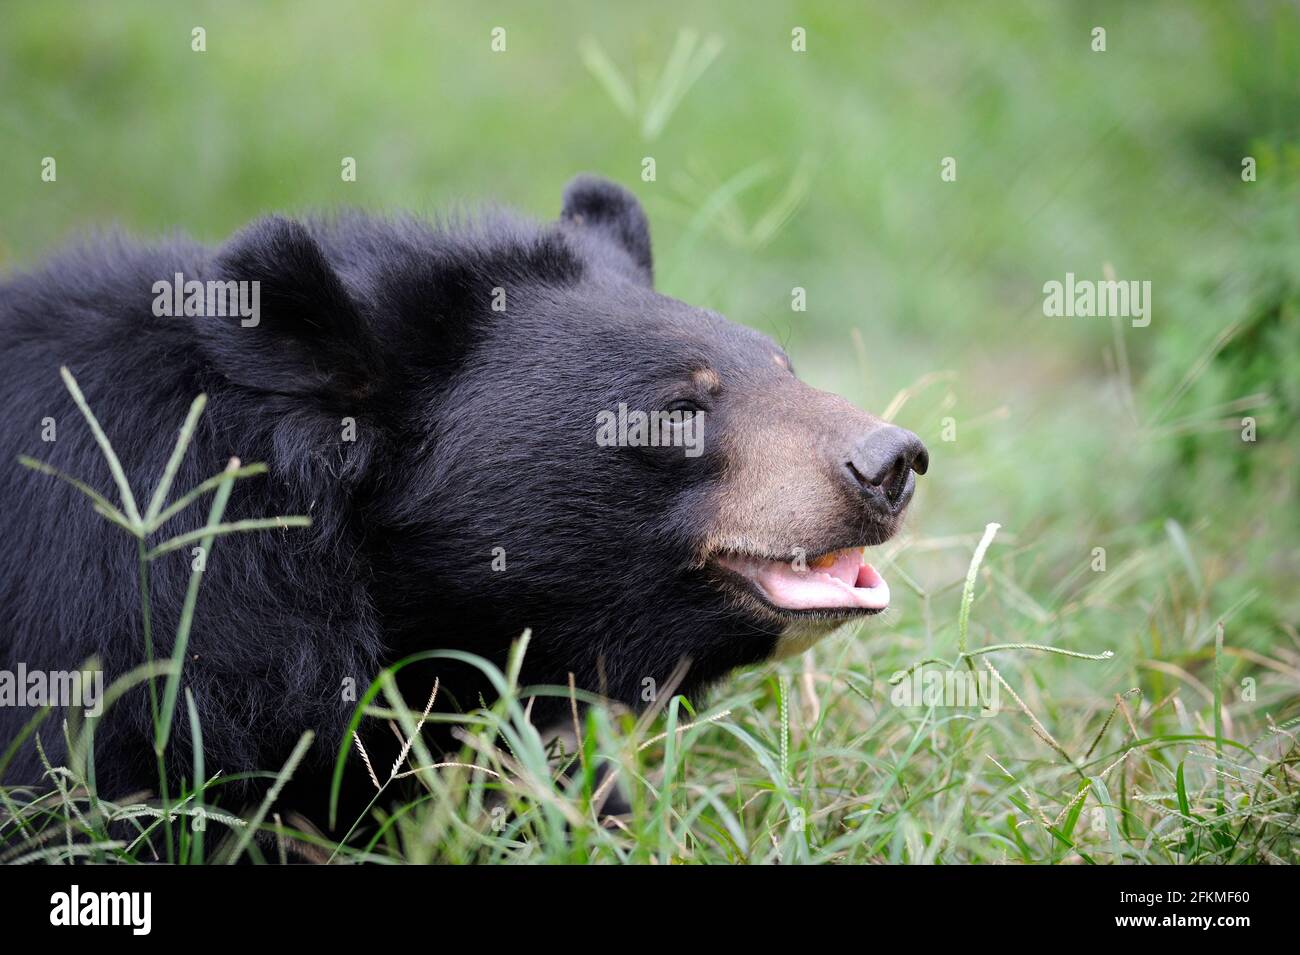 Asian black bear (Ursus thibetanus) (Selenarctos thibetanus), moon bear Stock Photo